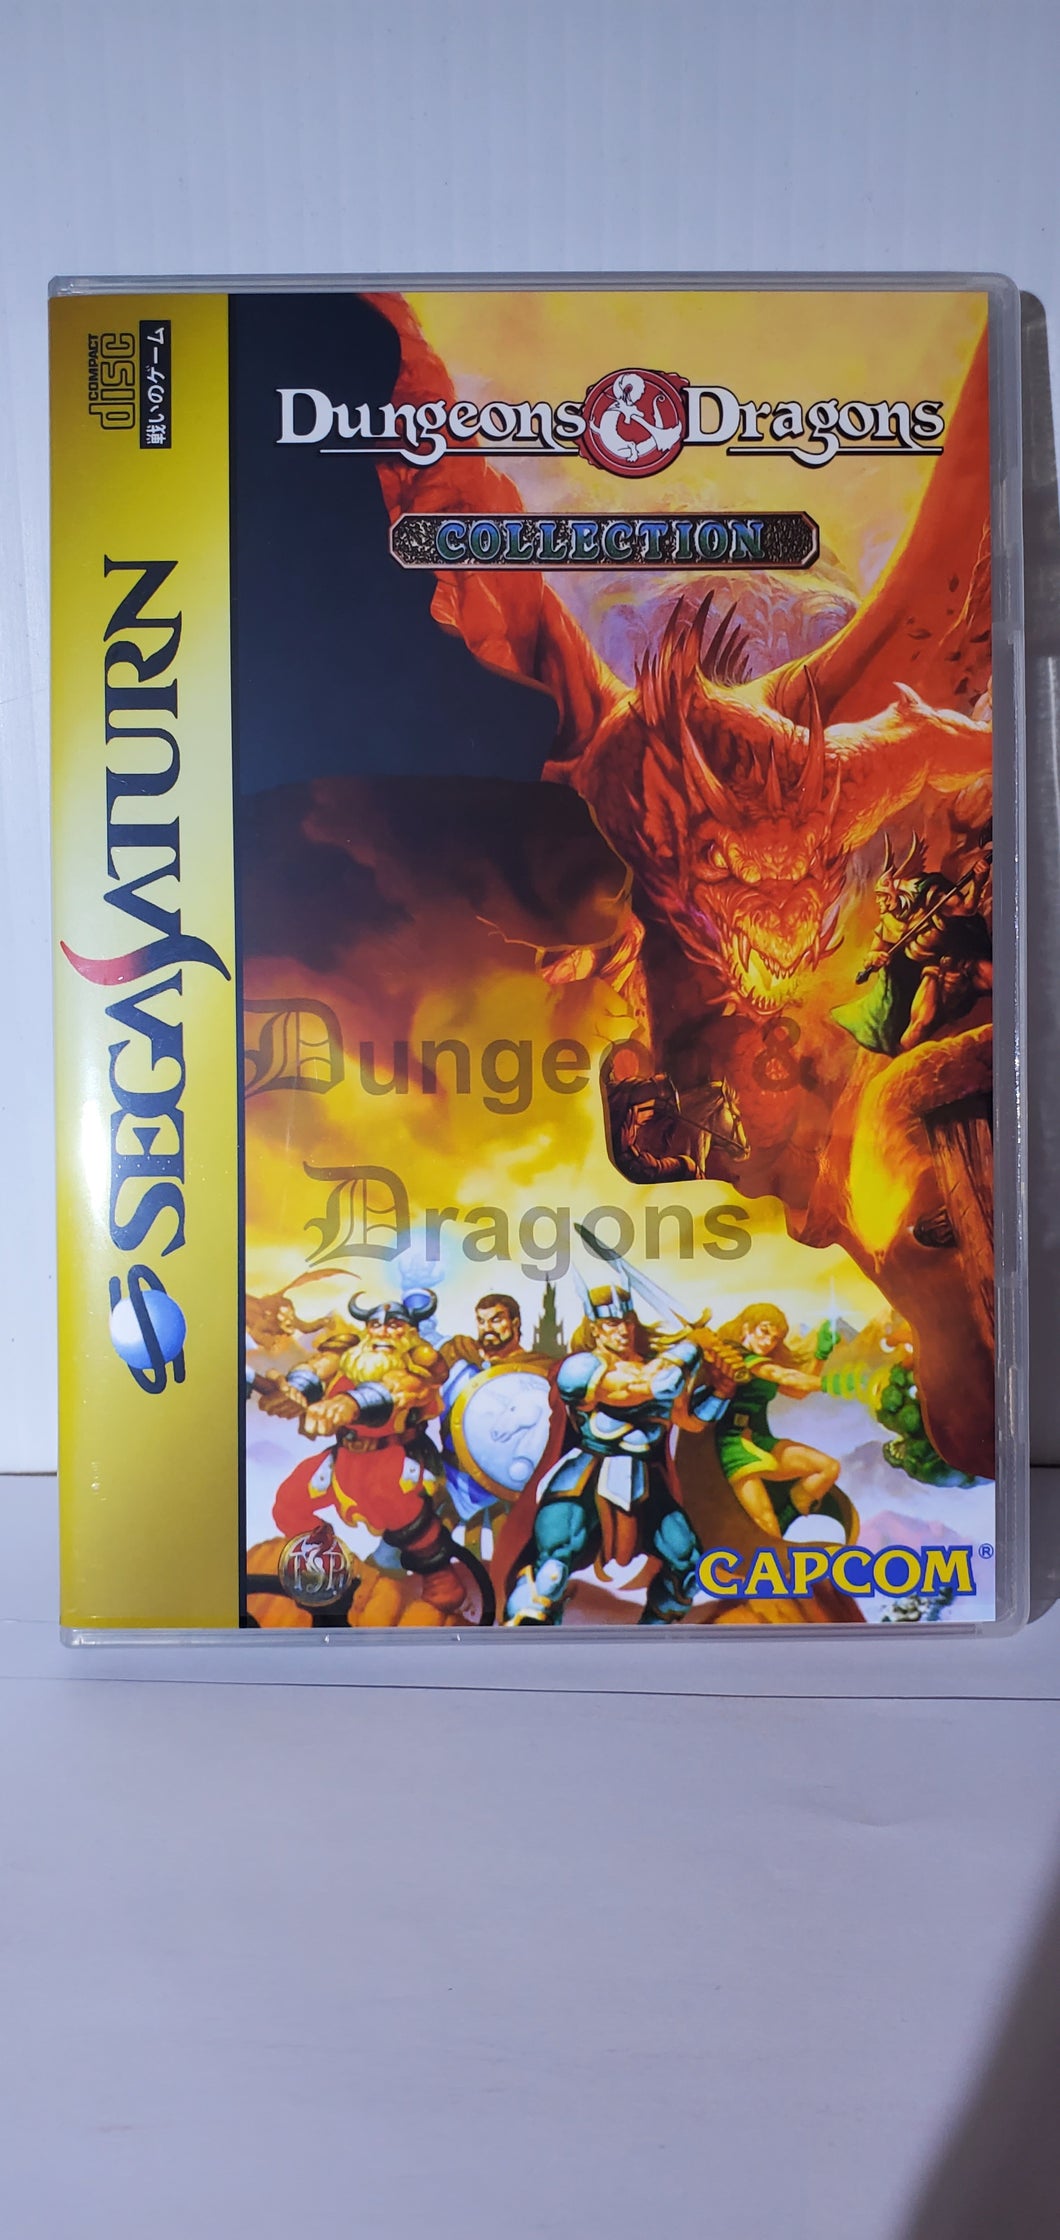 Sega Saturn dungeons & dragons collection 2 disc set